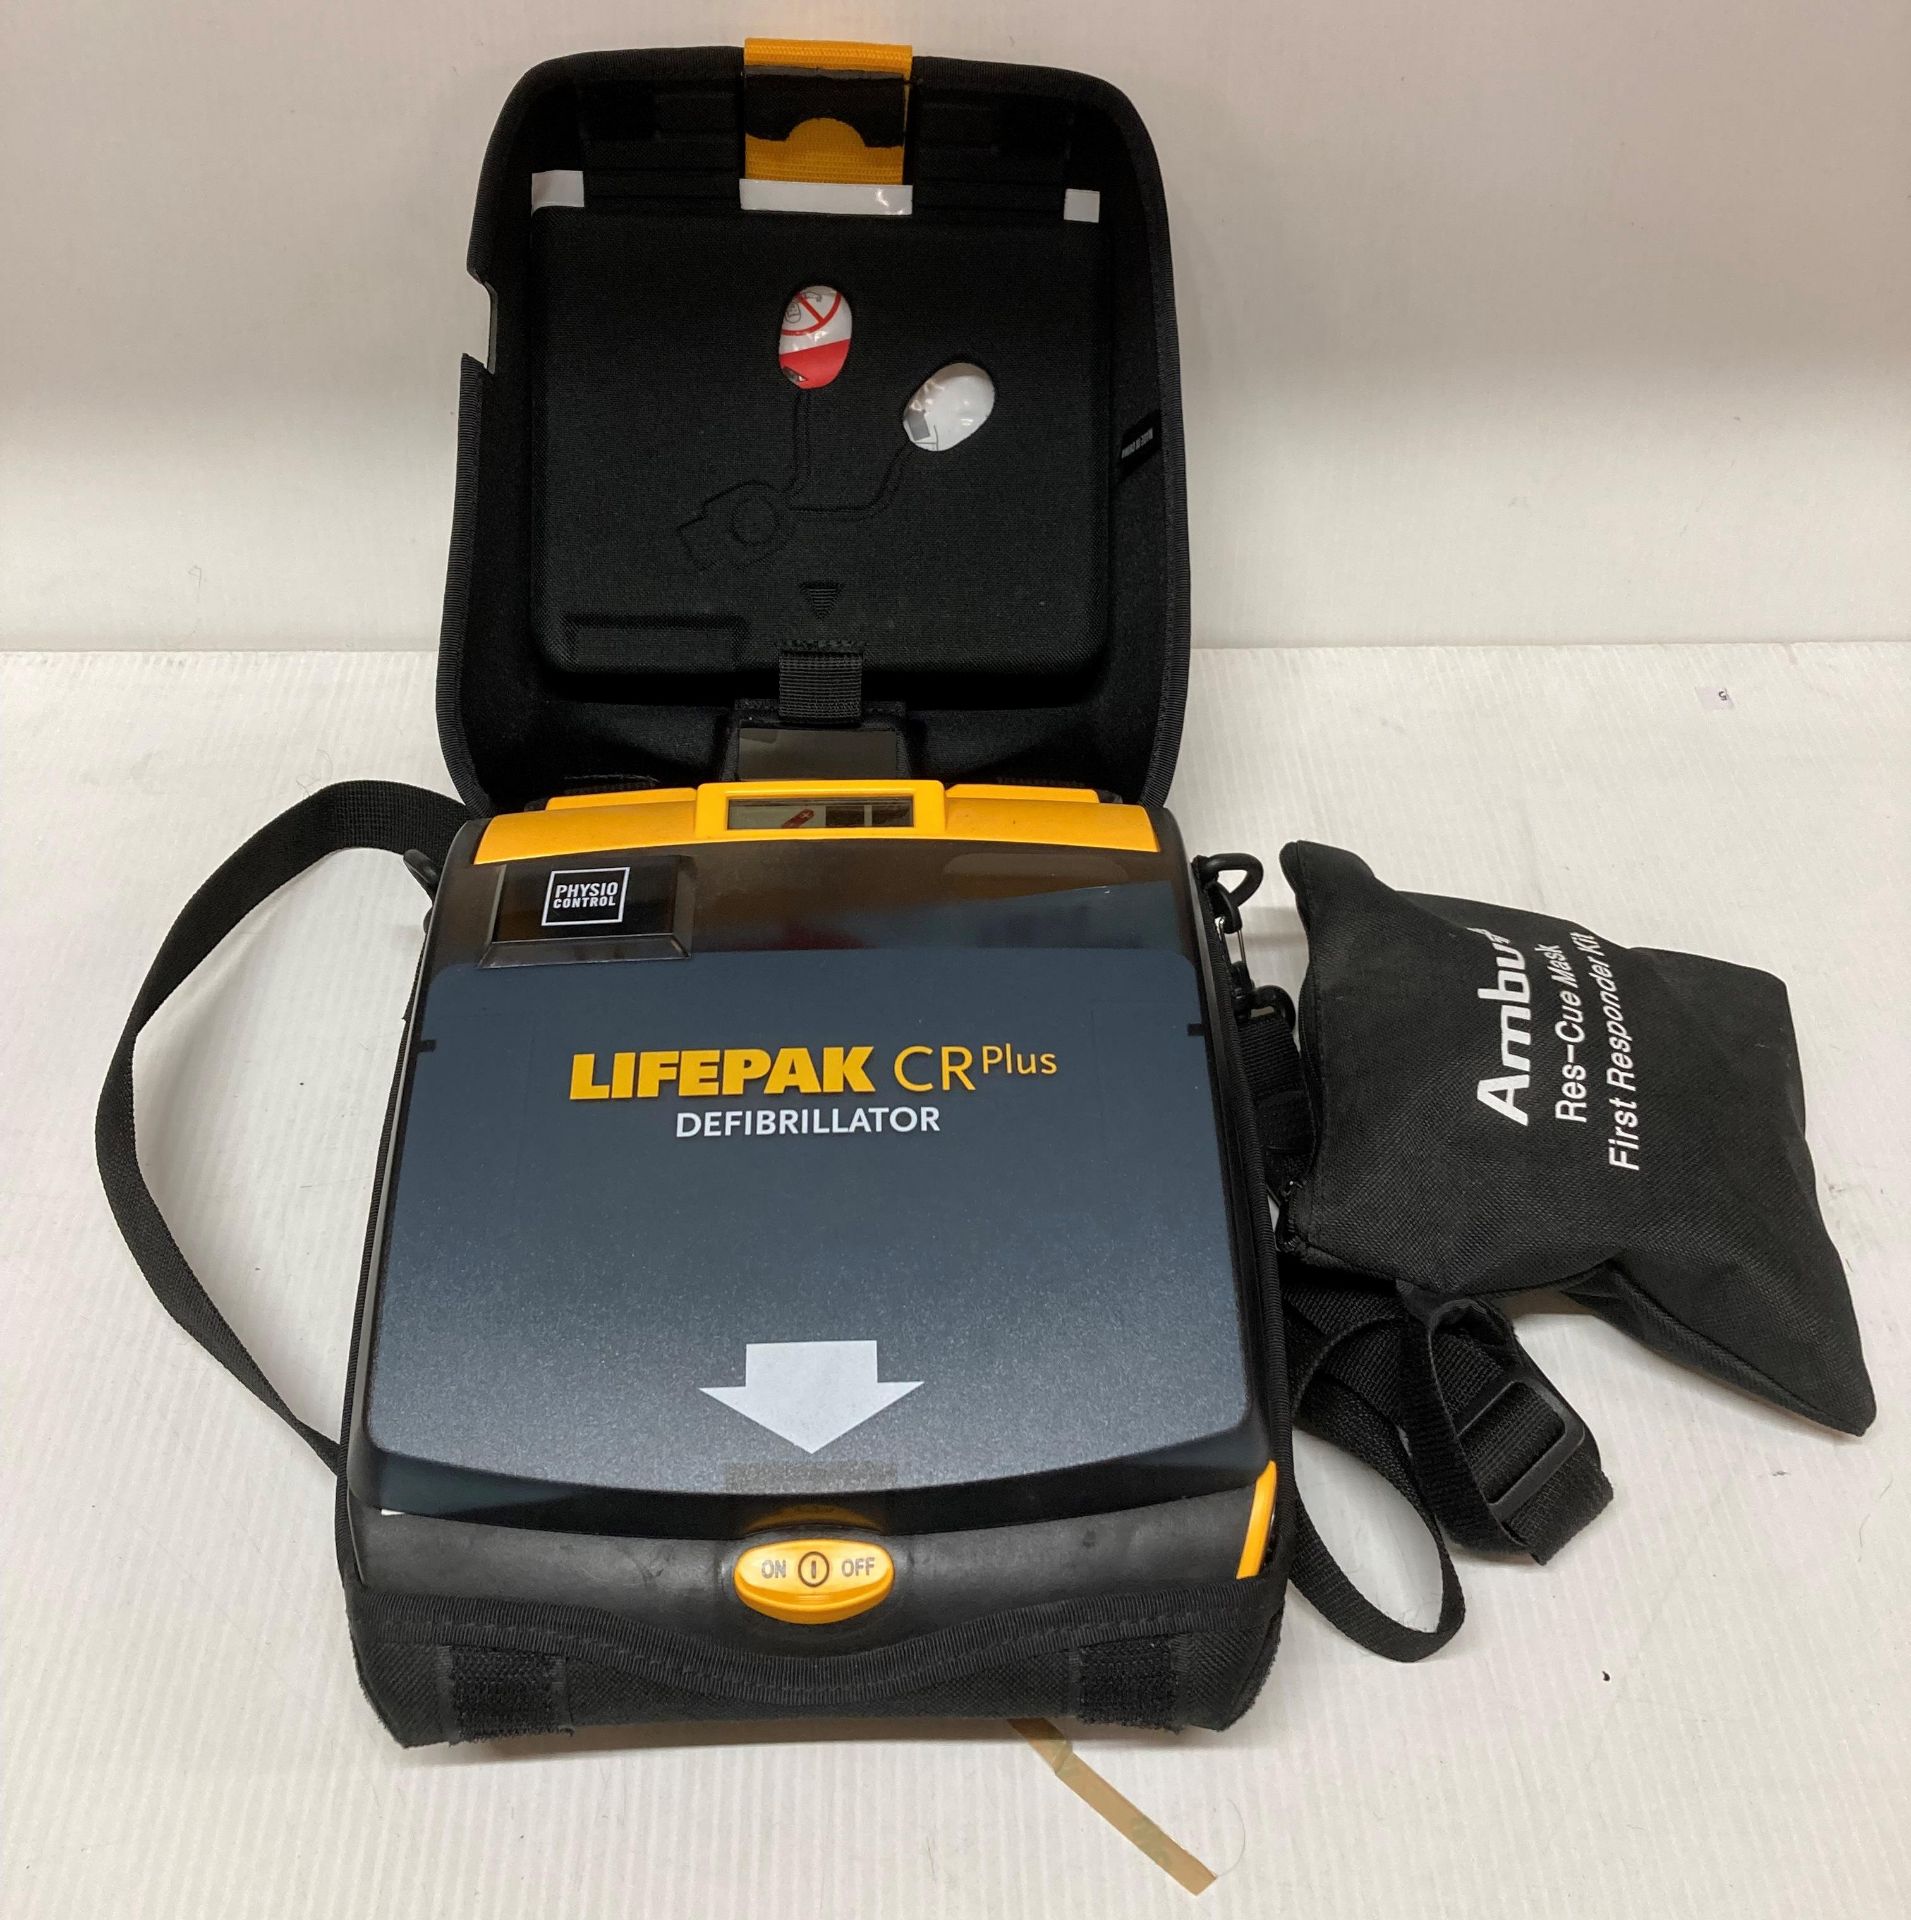 LifePak CR plus defibrillator by Physio control in a carrying case (saleroom location: Y01)